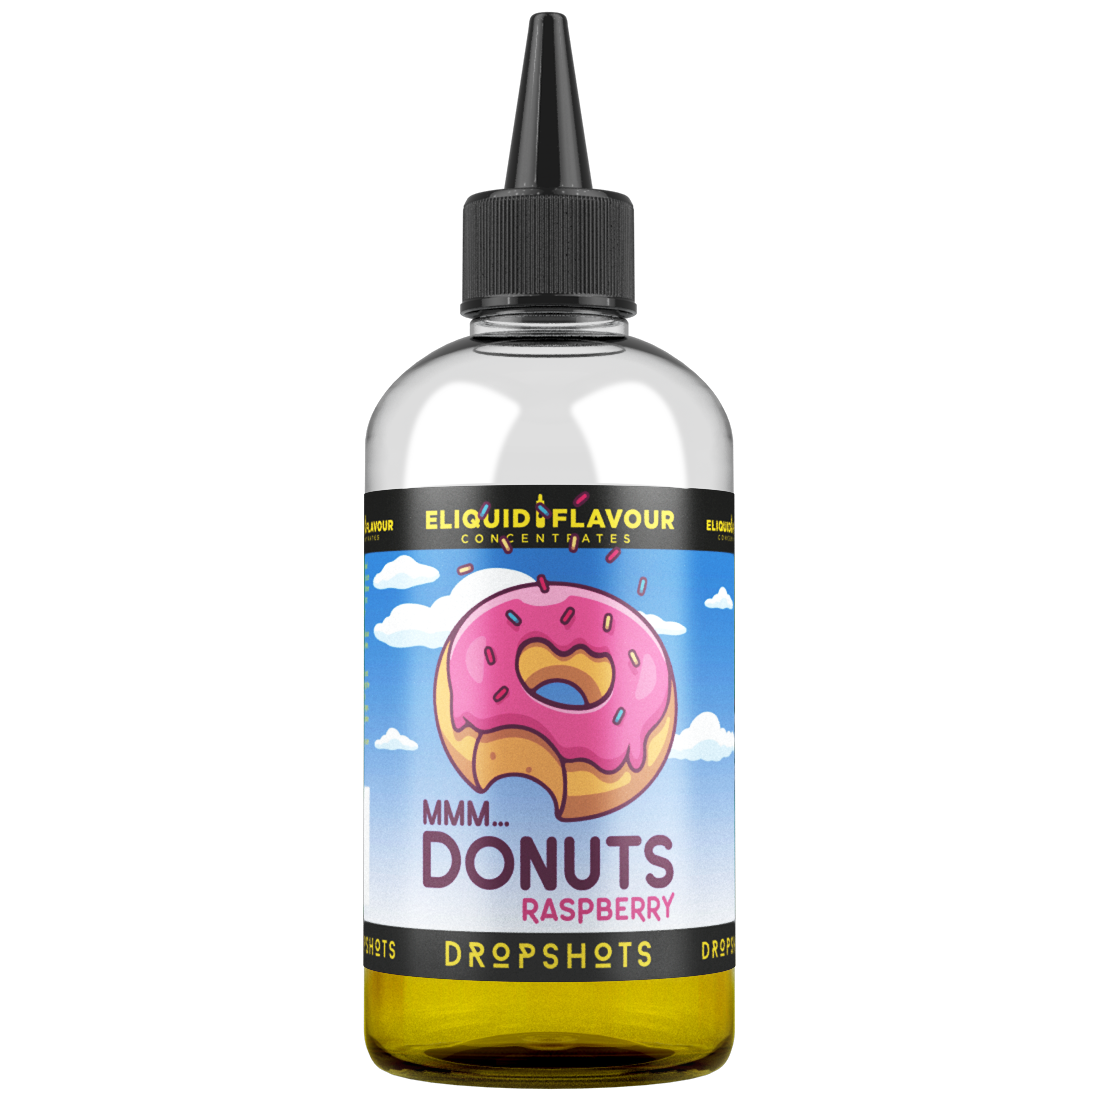 Mmm... Donuts - Raspberry DropShot by ELFC